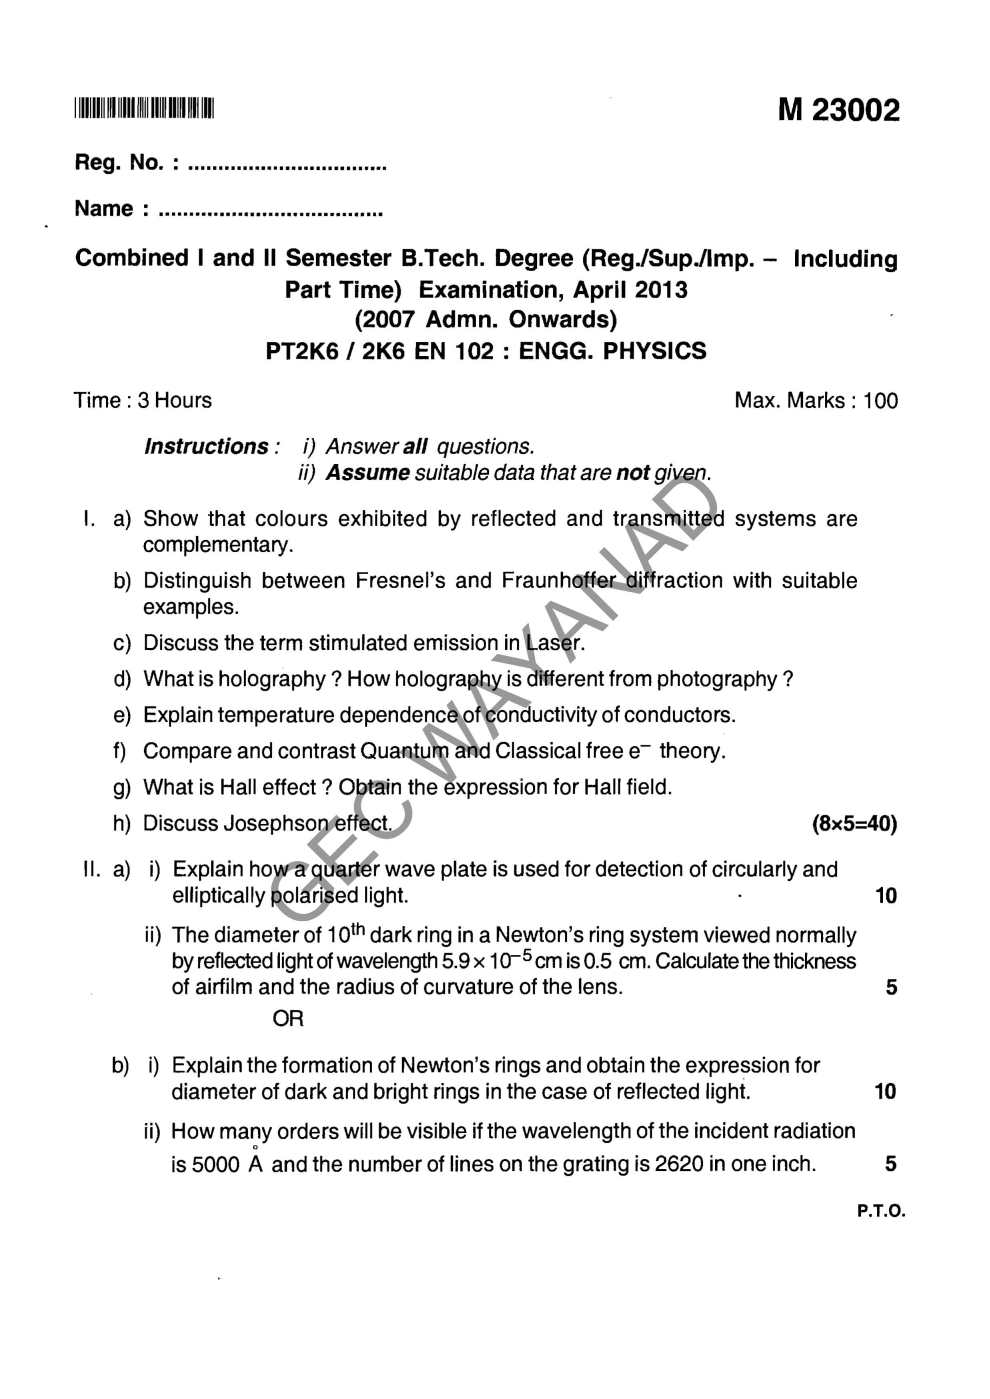 kannur university assignment question paper